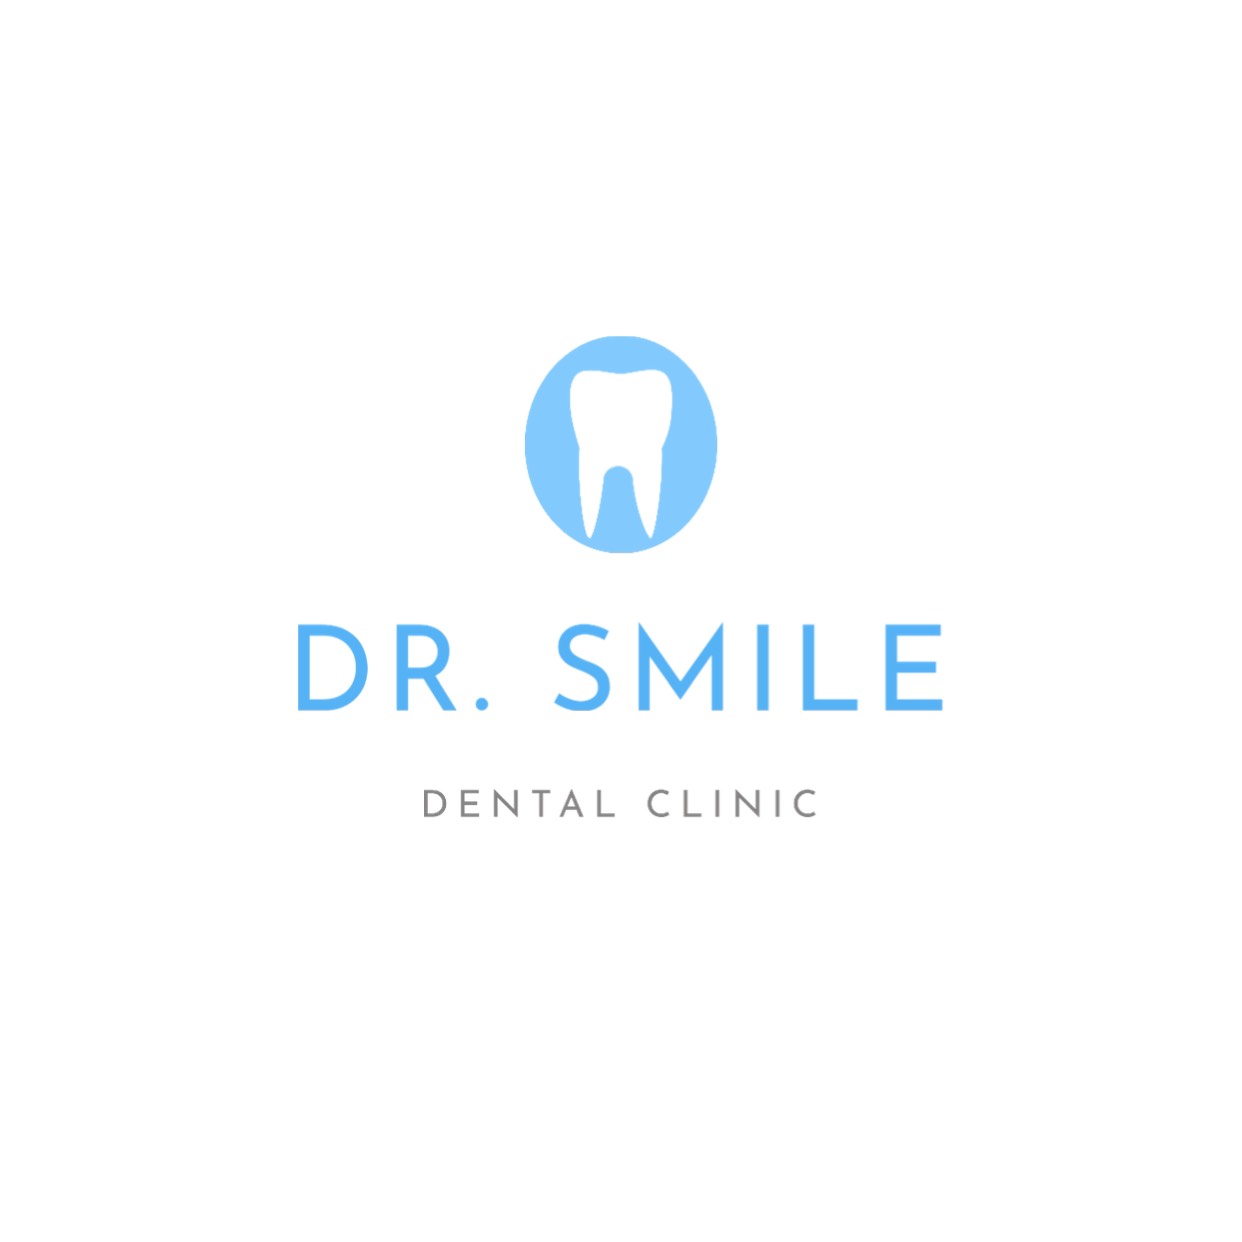 Dental clinic Dr. smile business logo template